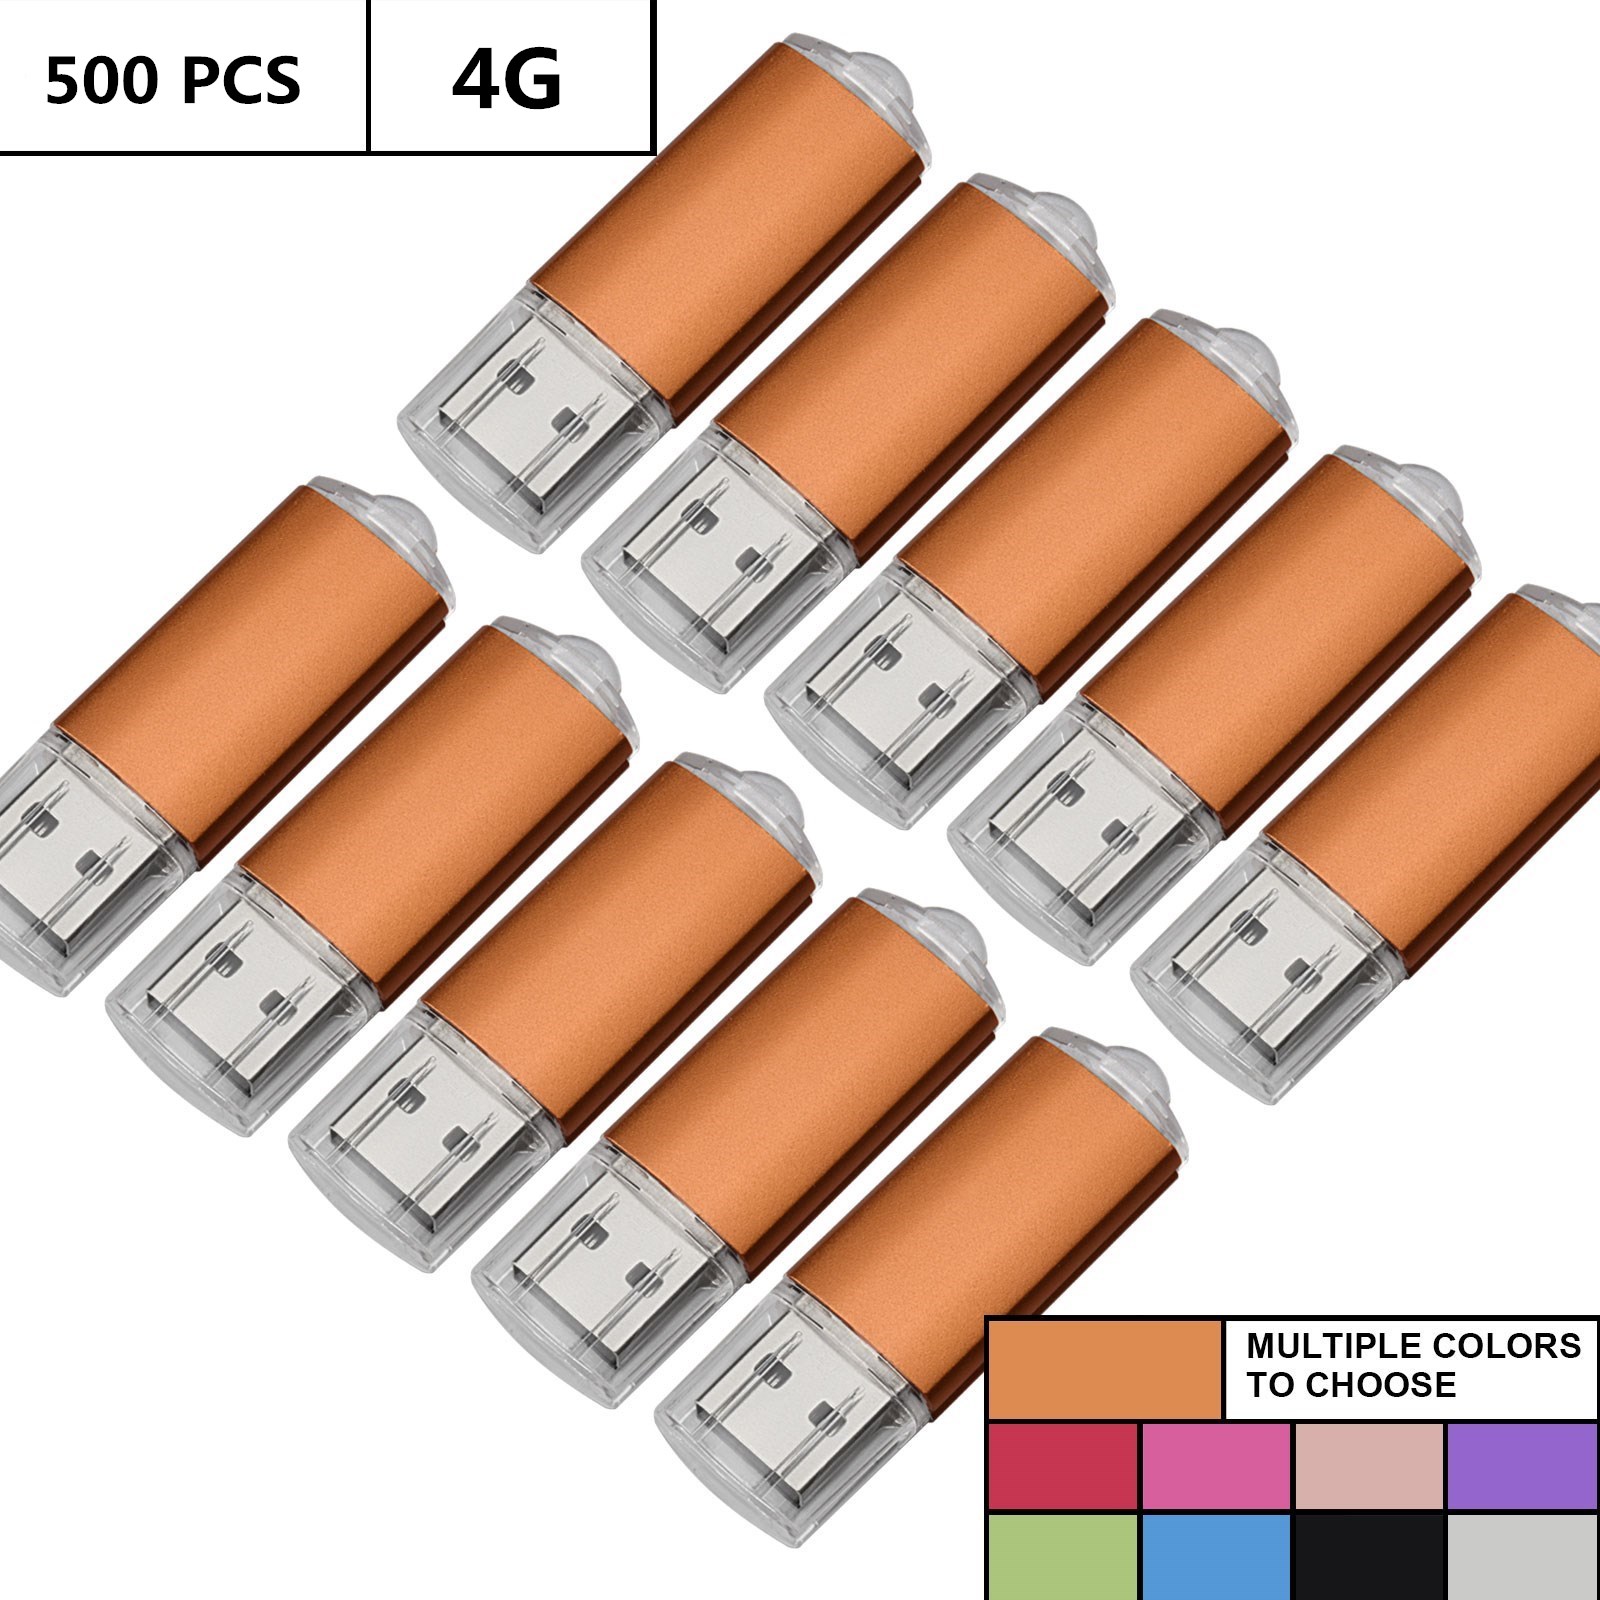 Wholesale Bulk 500PCS 4GB USB Flash Drives Rectangle Flash Pen Drives Memory Sticks Thumb Storage for Computer Macbook LED Indicator U Disk